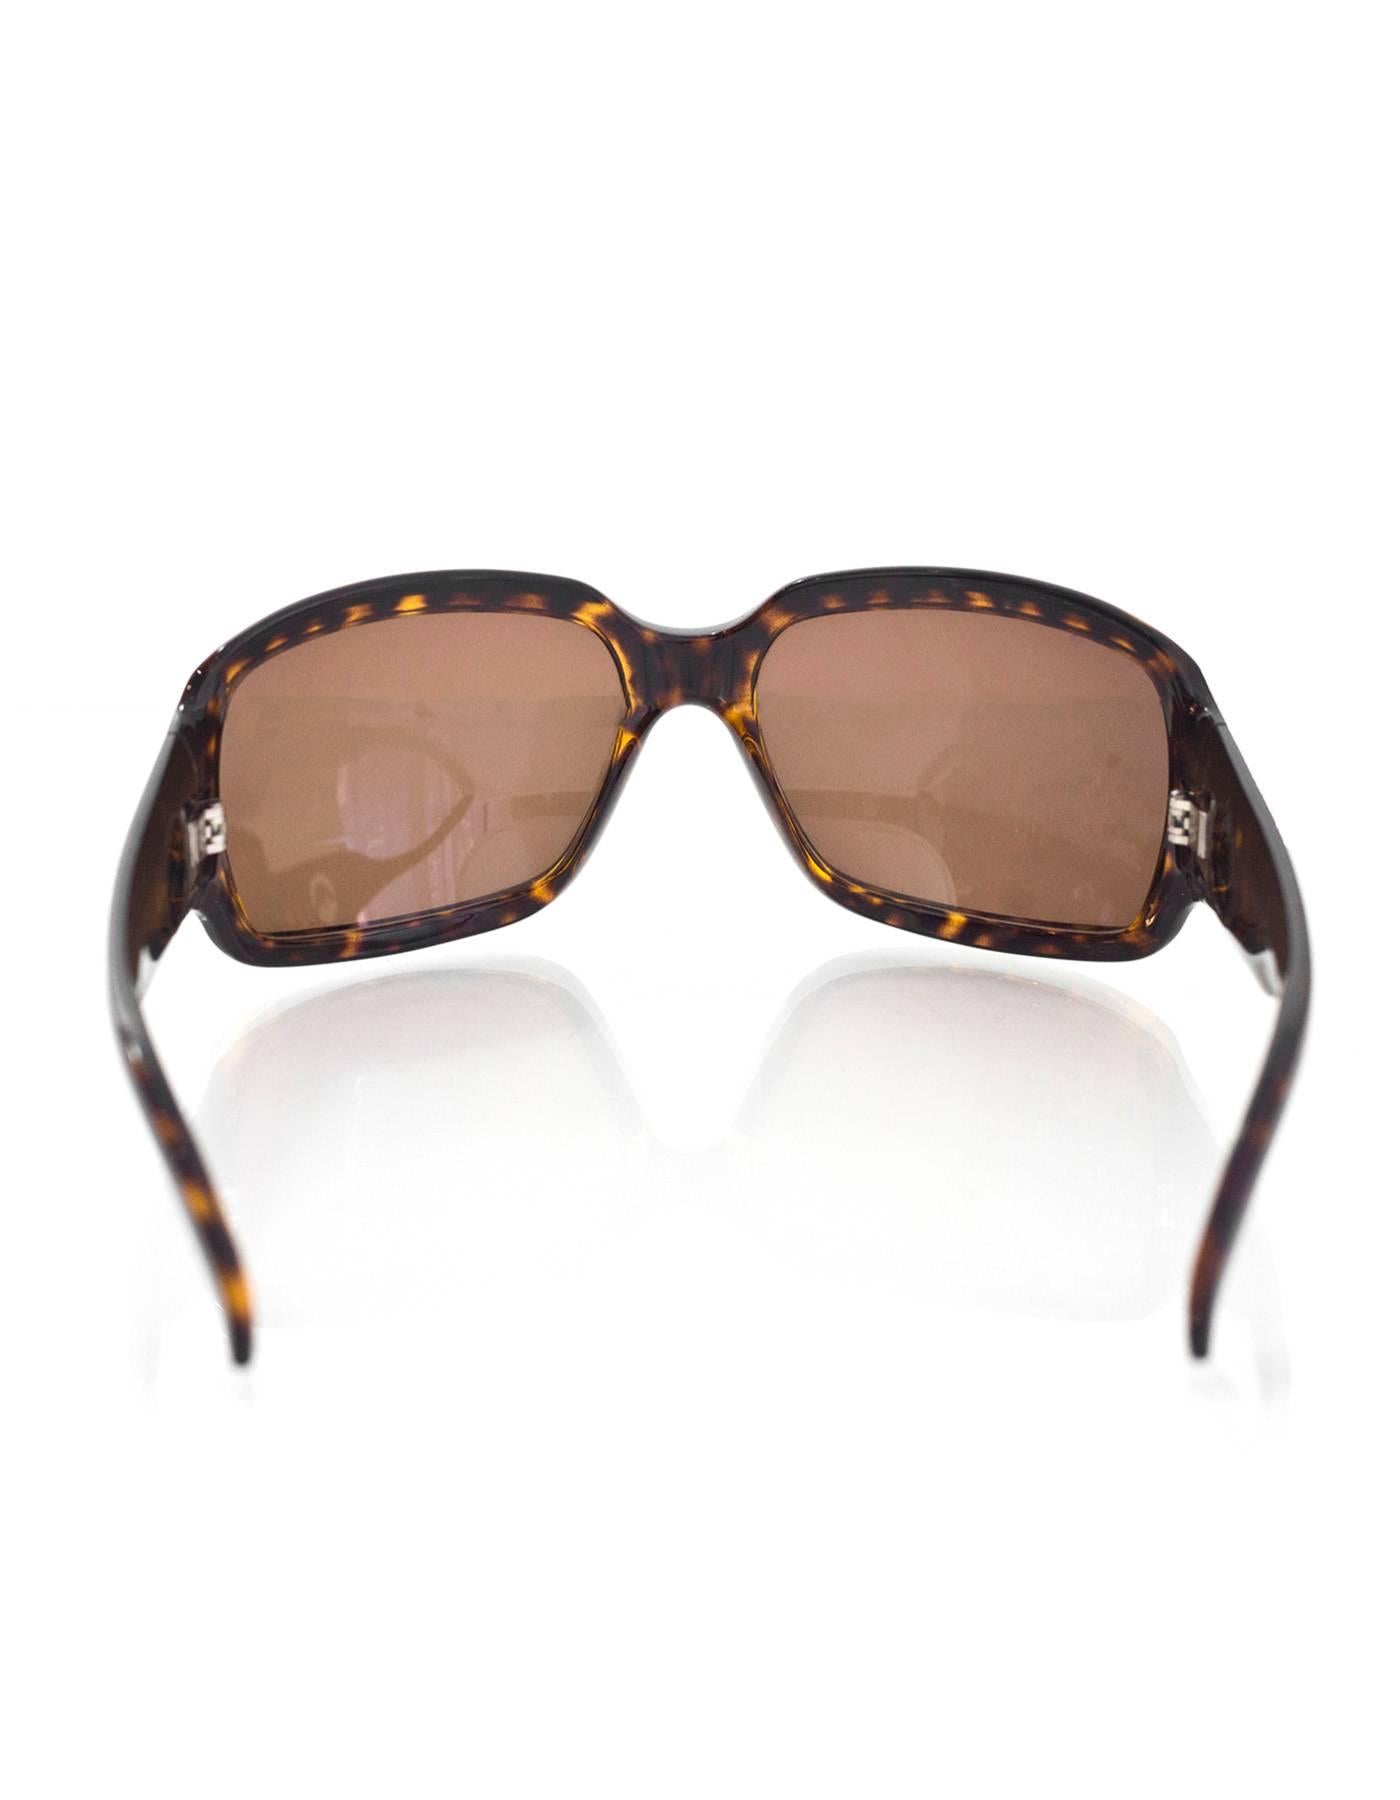 Emporio Armani Tortoise Square Sunglasses with Case In Excellent Condition In New York, NY